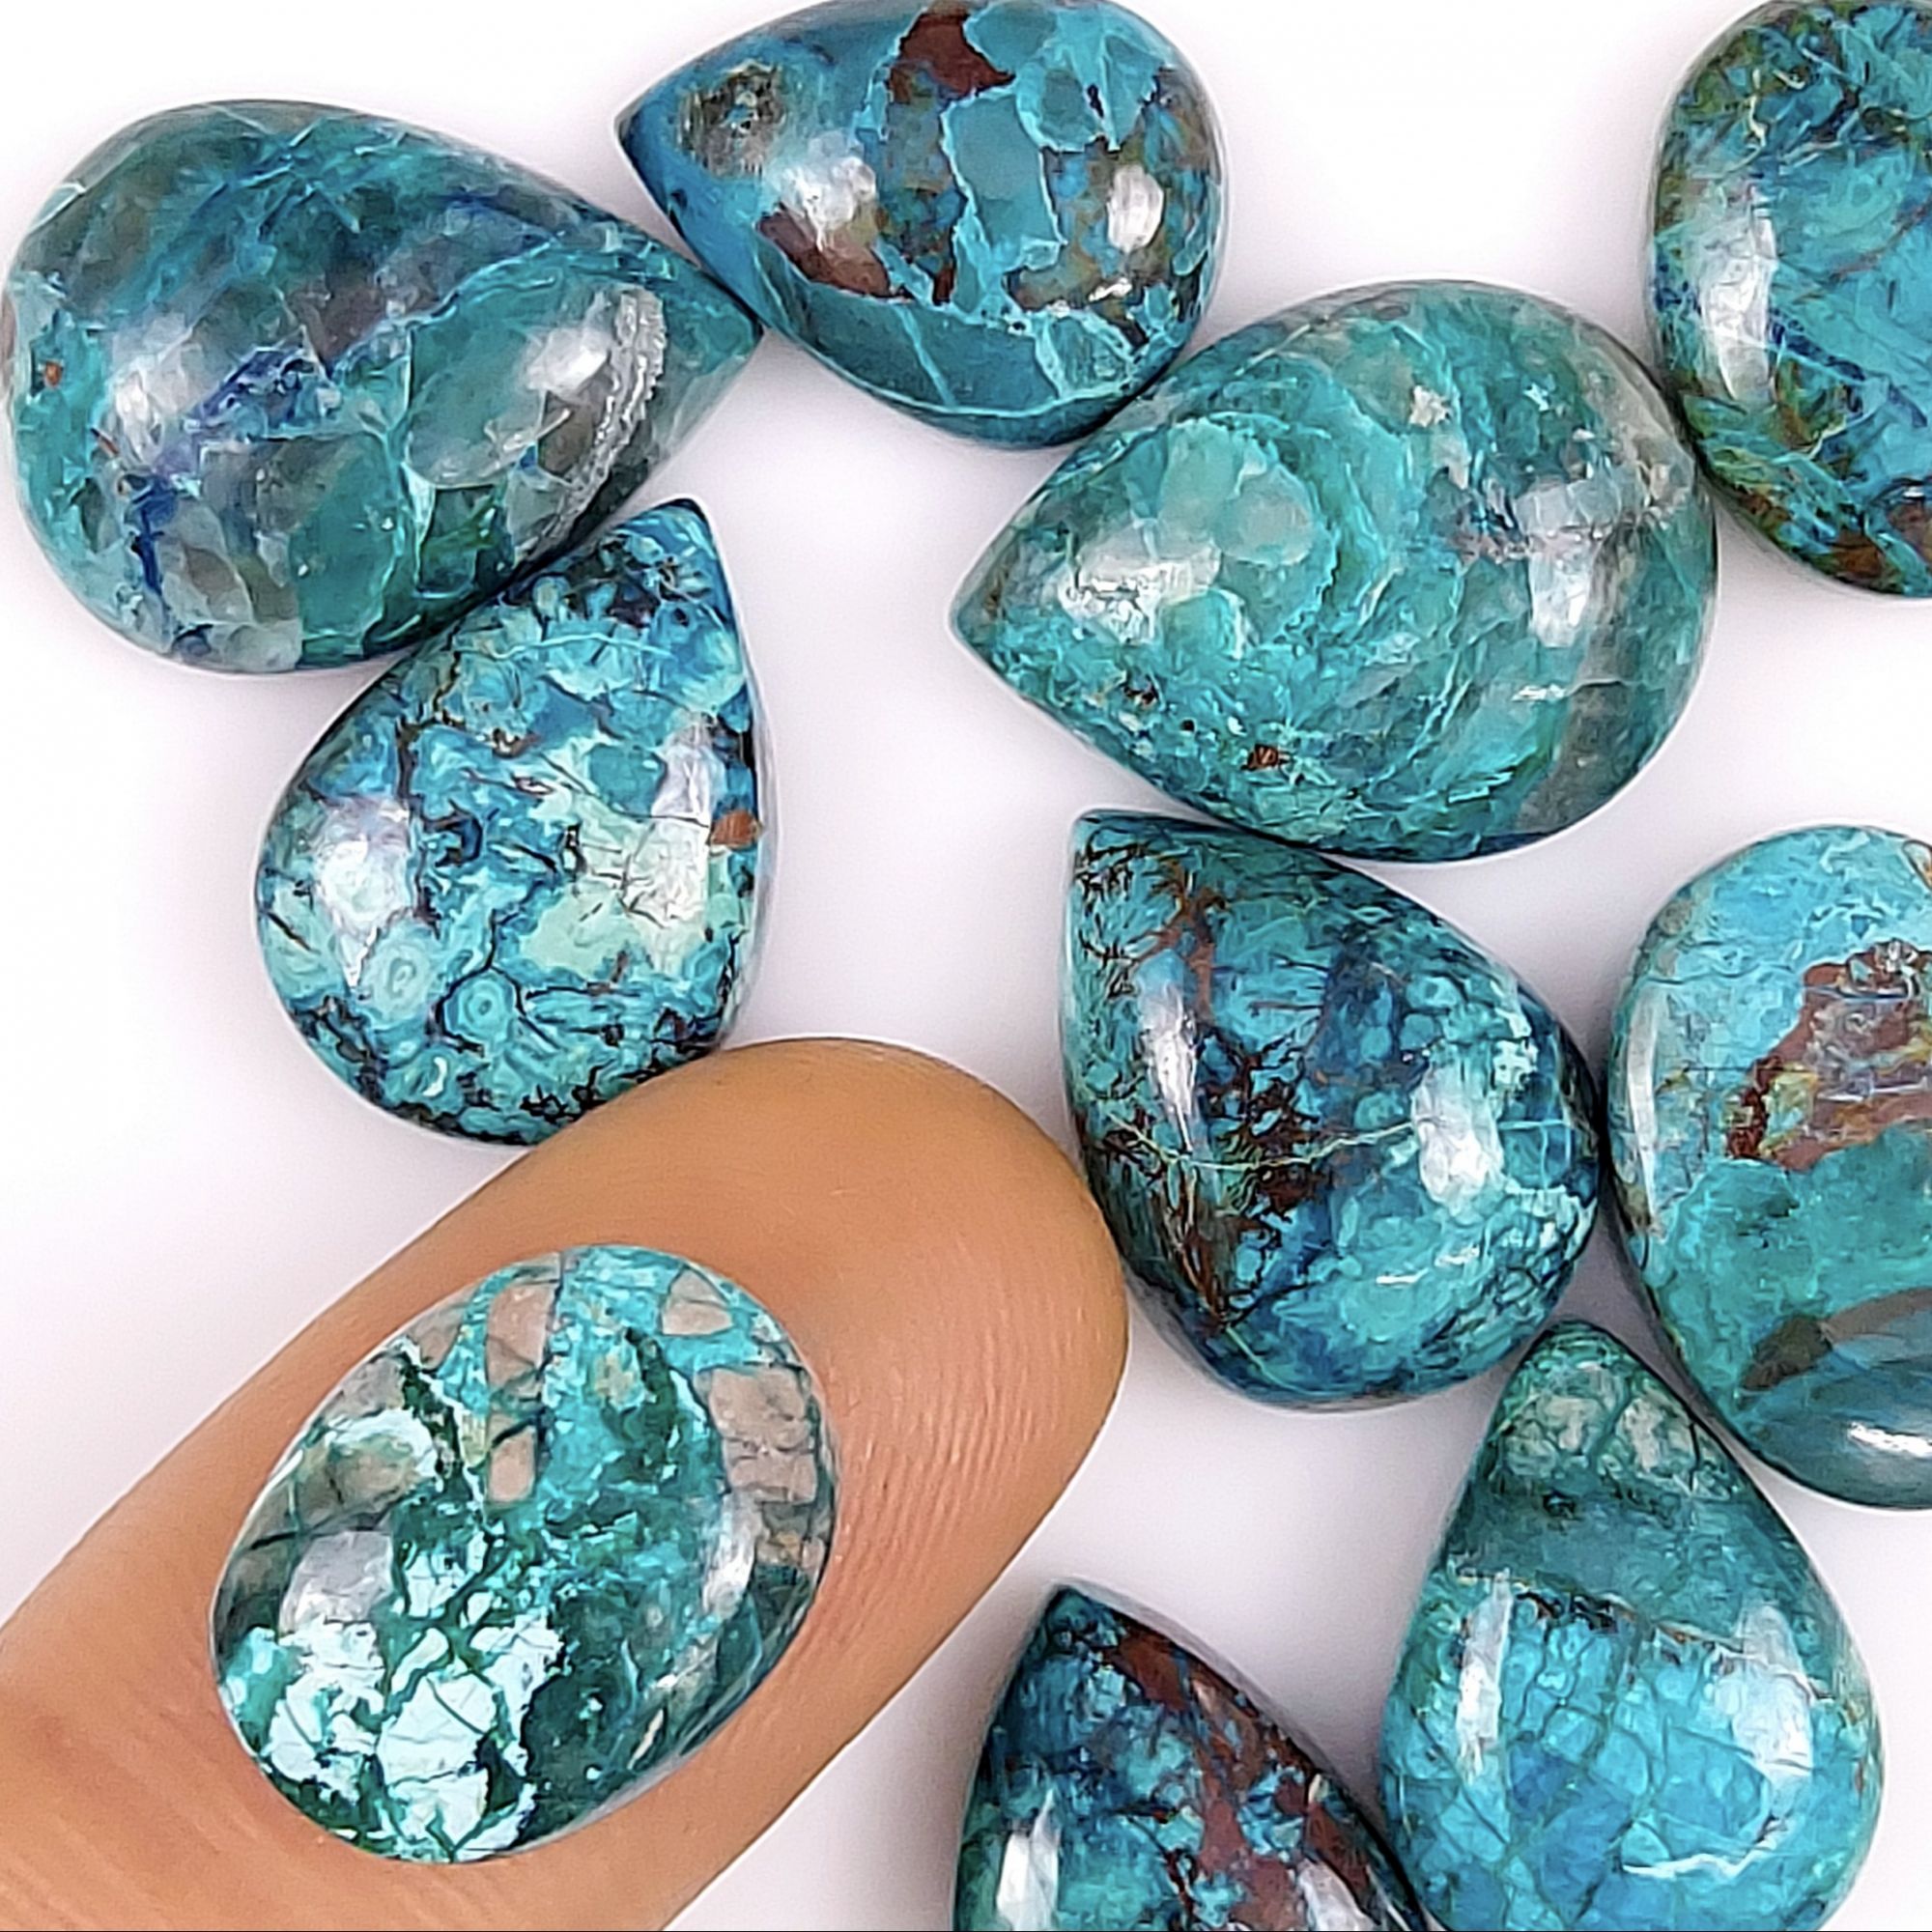 10 Pcs 113Cts Natural Chrysocolla Cabochon Lot Healing stone crystal,Loose gemstones Chrysocolla Mix Shape & Size Jewelry making Gemstone 20x15 16x12mm #5758